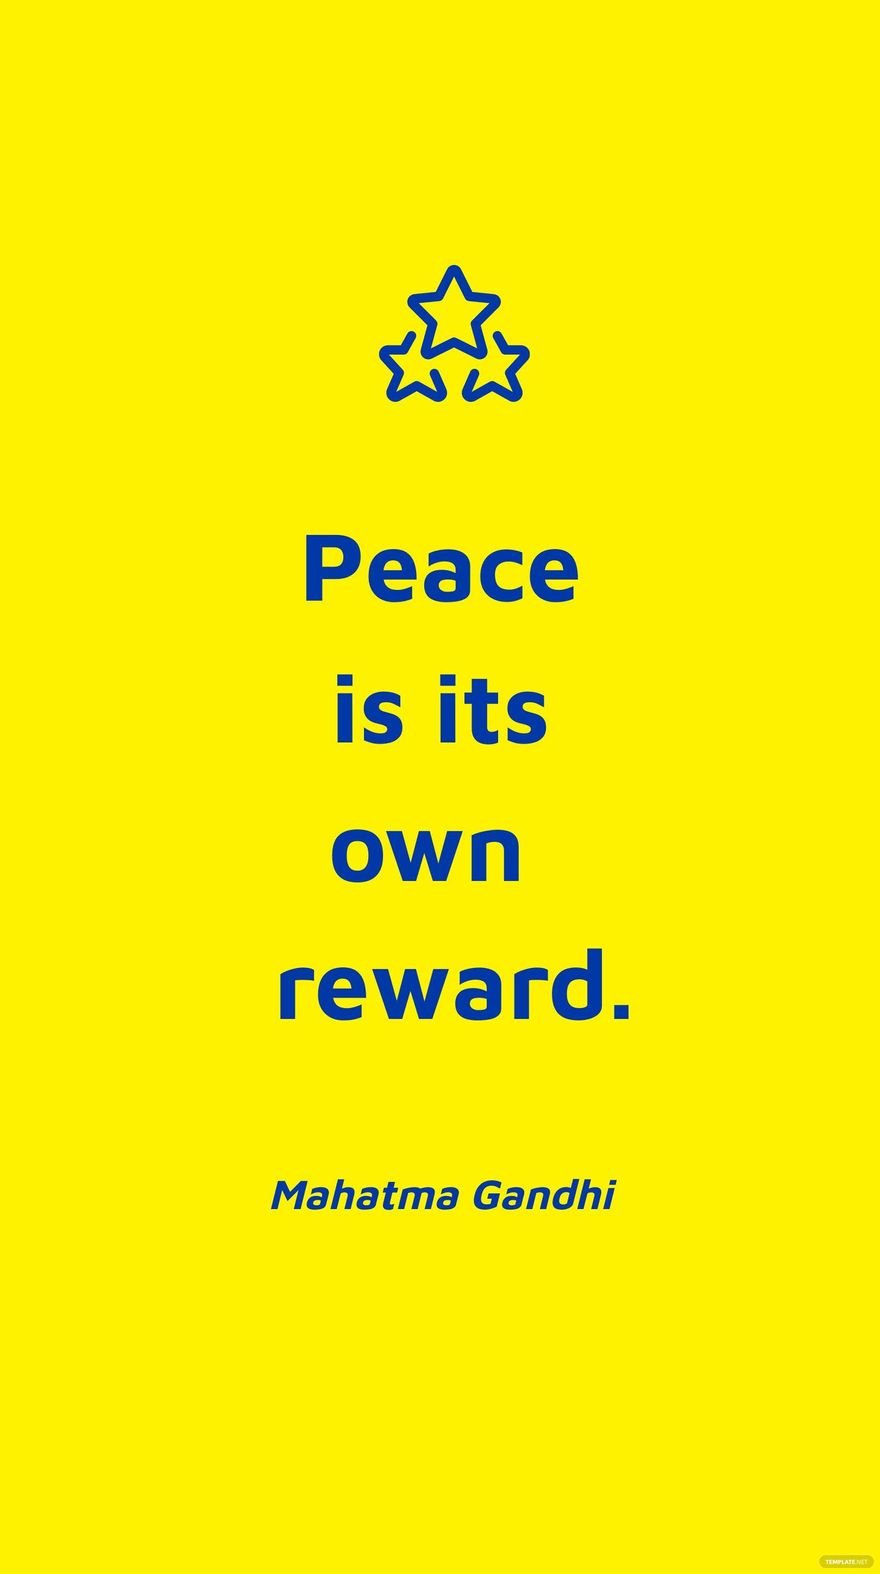 Mahatma Gandhi - Peace is its own reward.